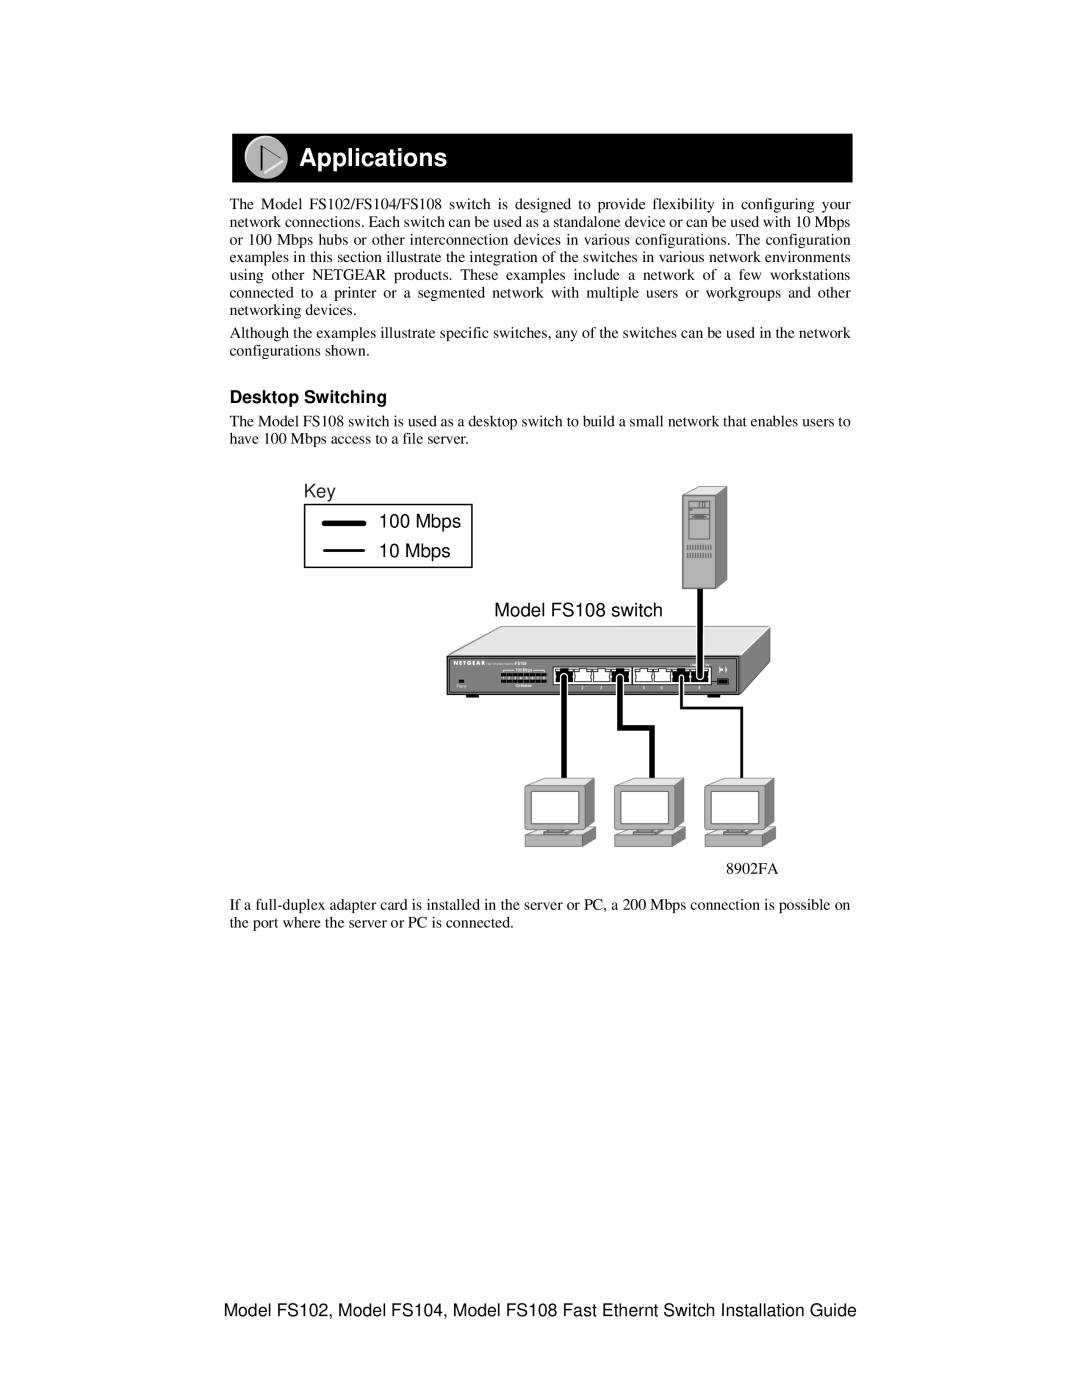 NETGEAR FS102 manual Applications, Key 100 Mbps 10 Mbps Model FS108 switch, Desktop Switching 